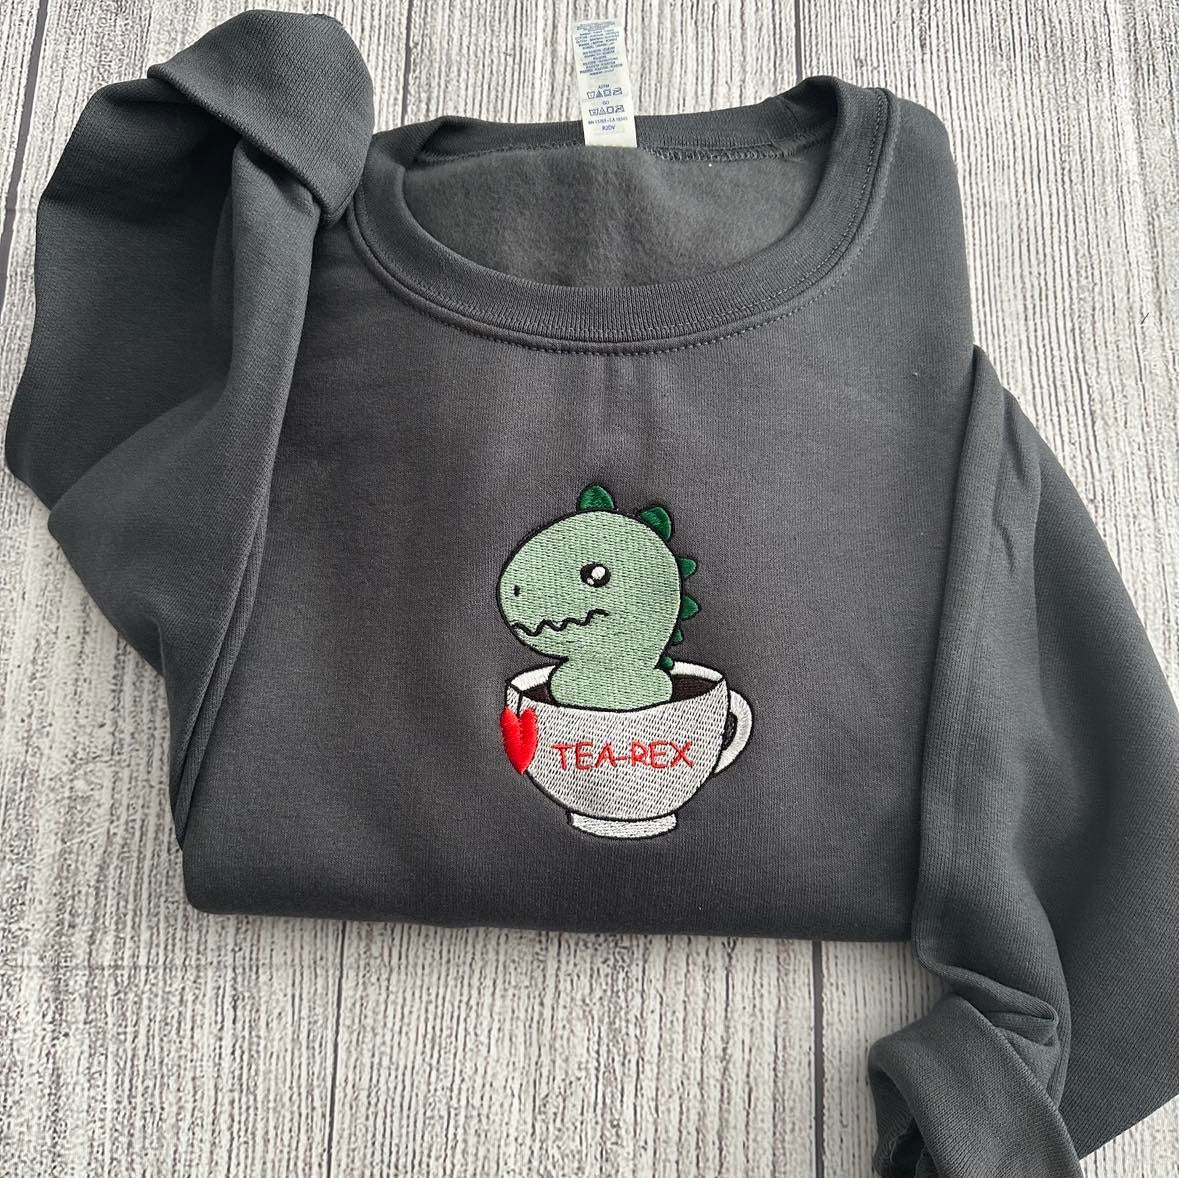 Tea Rex Embroidered sweatshirt; Dinosaurs sarcasm Embroidery crewneck